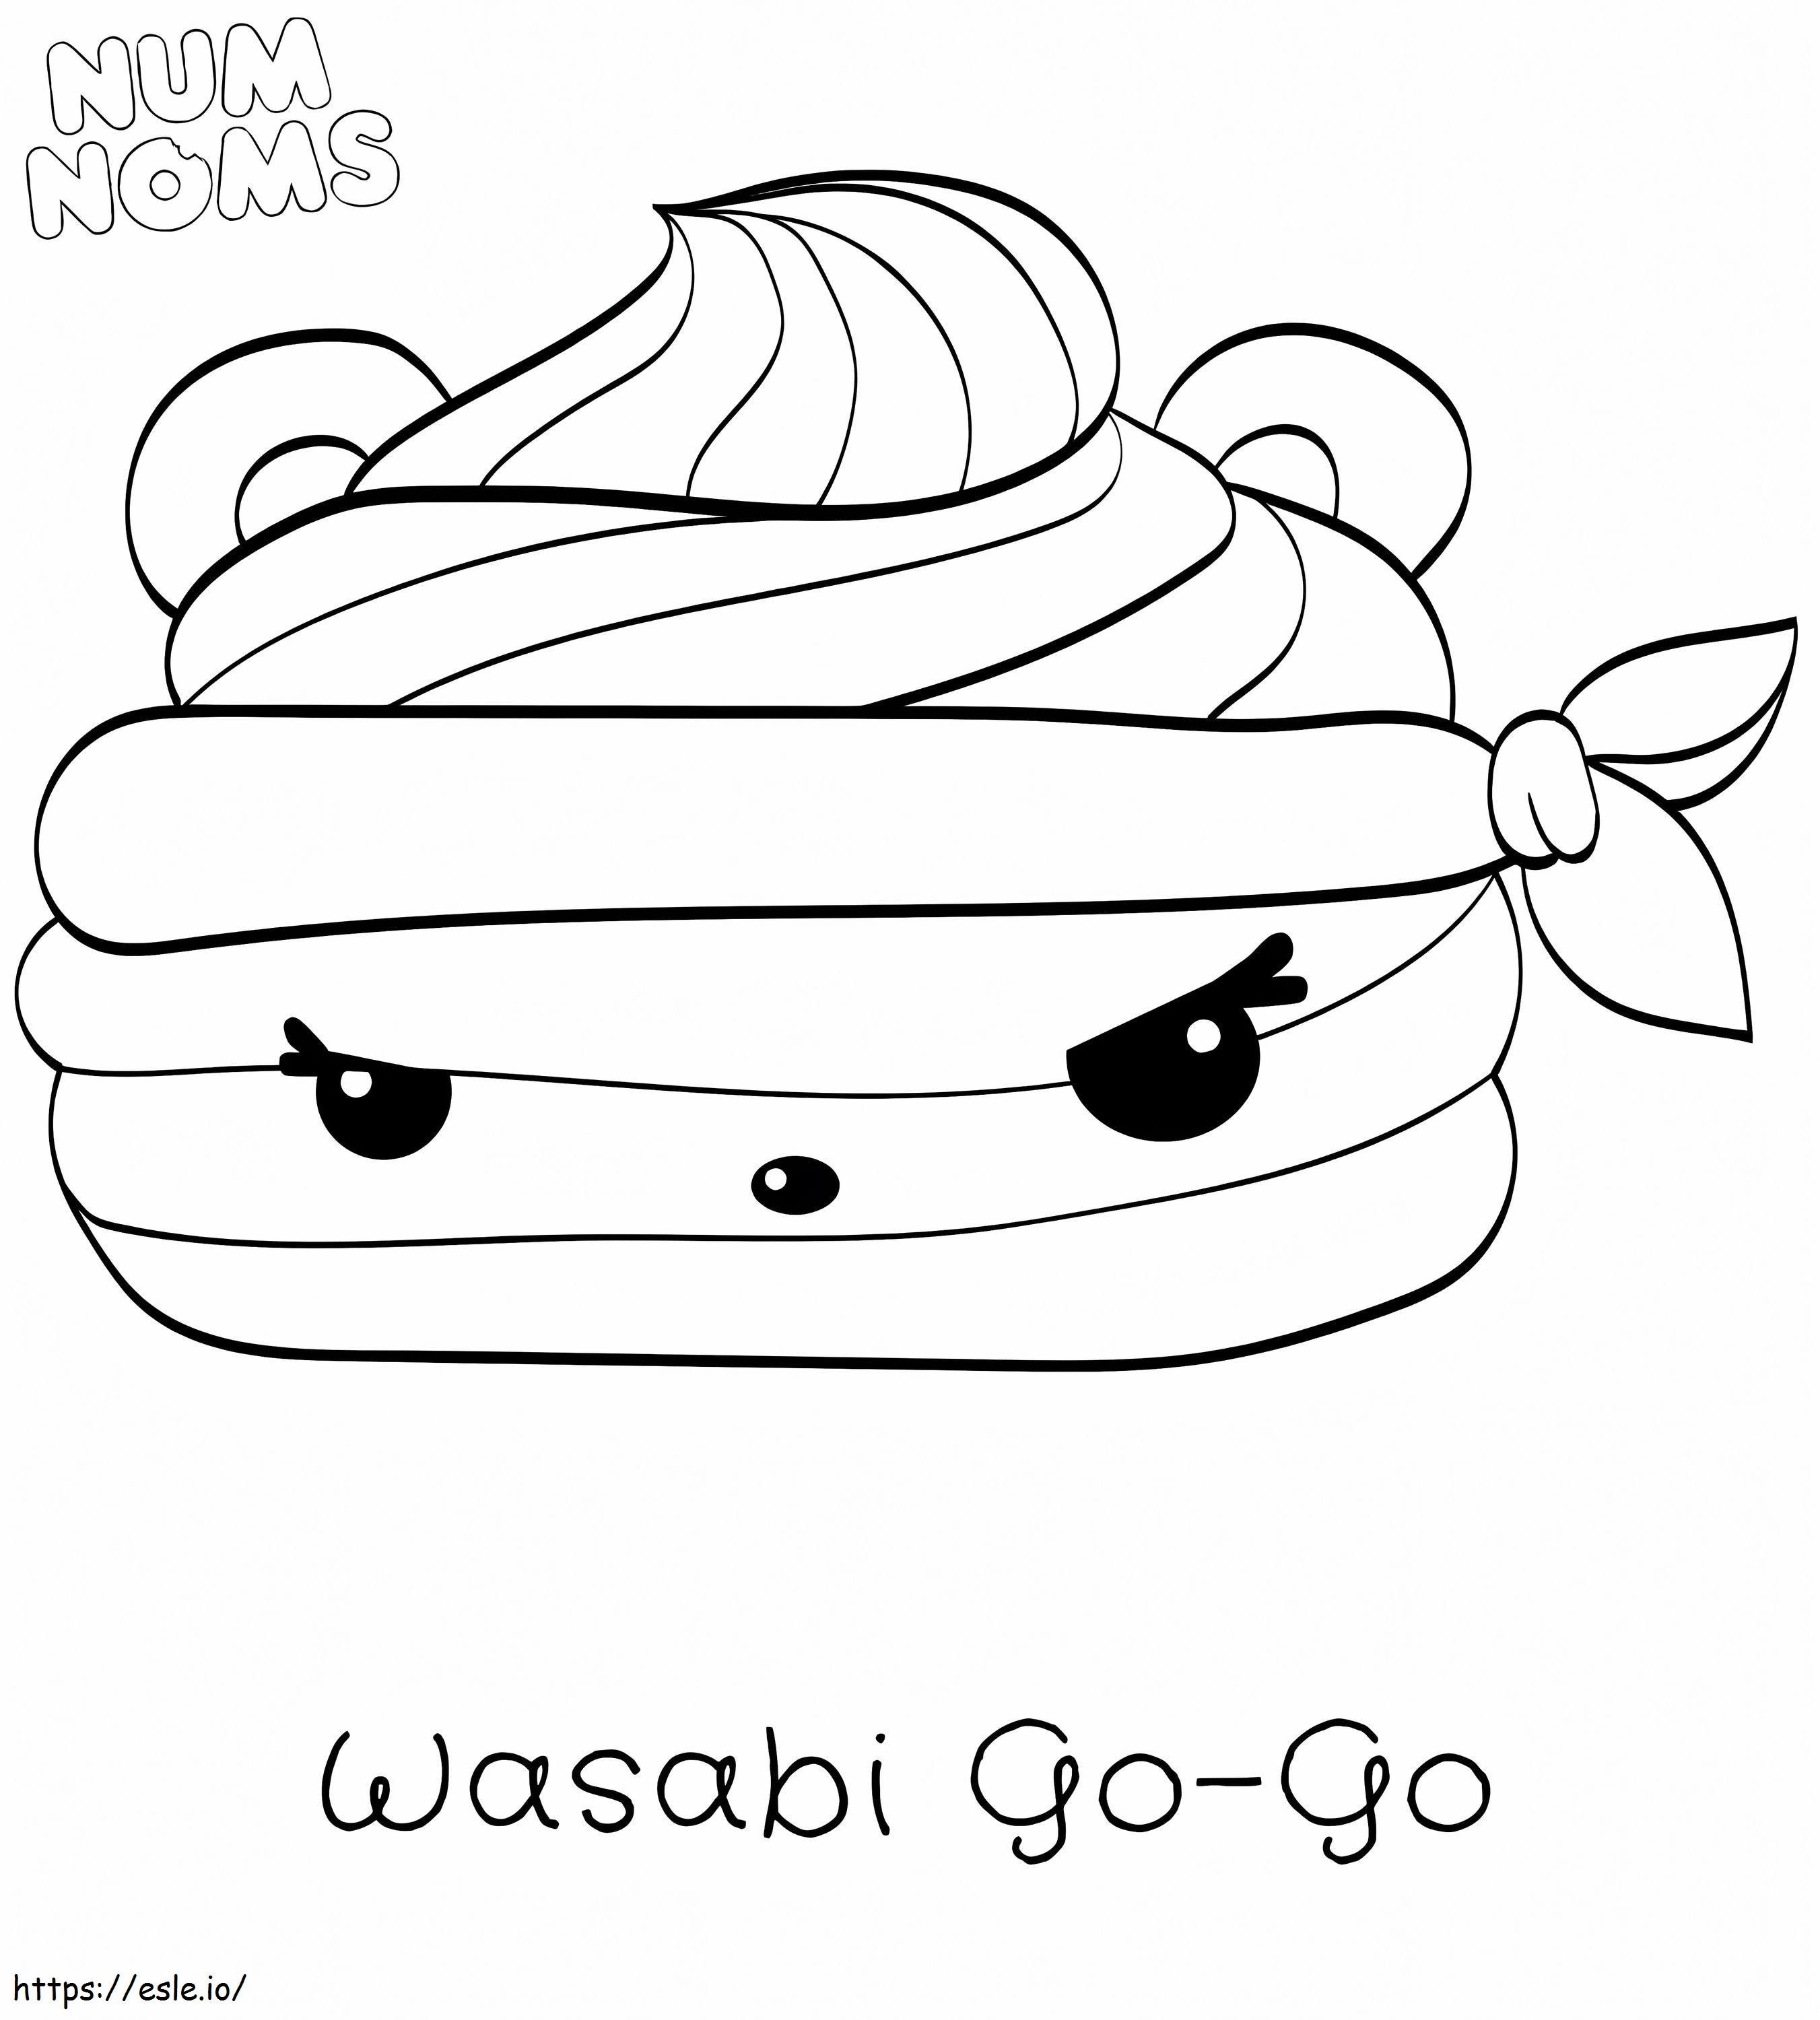 Fresco Wasabi Go Go și Num Noms de colorat